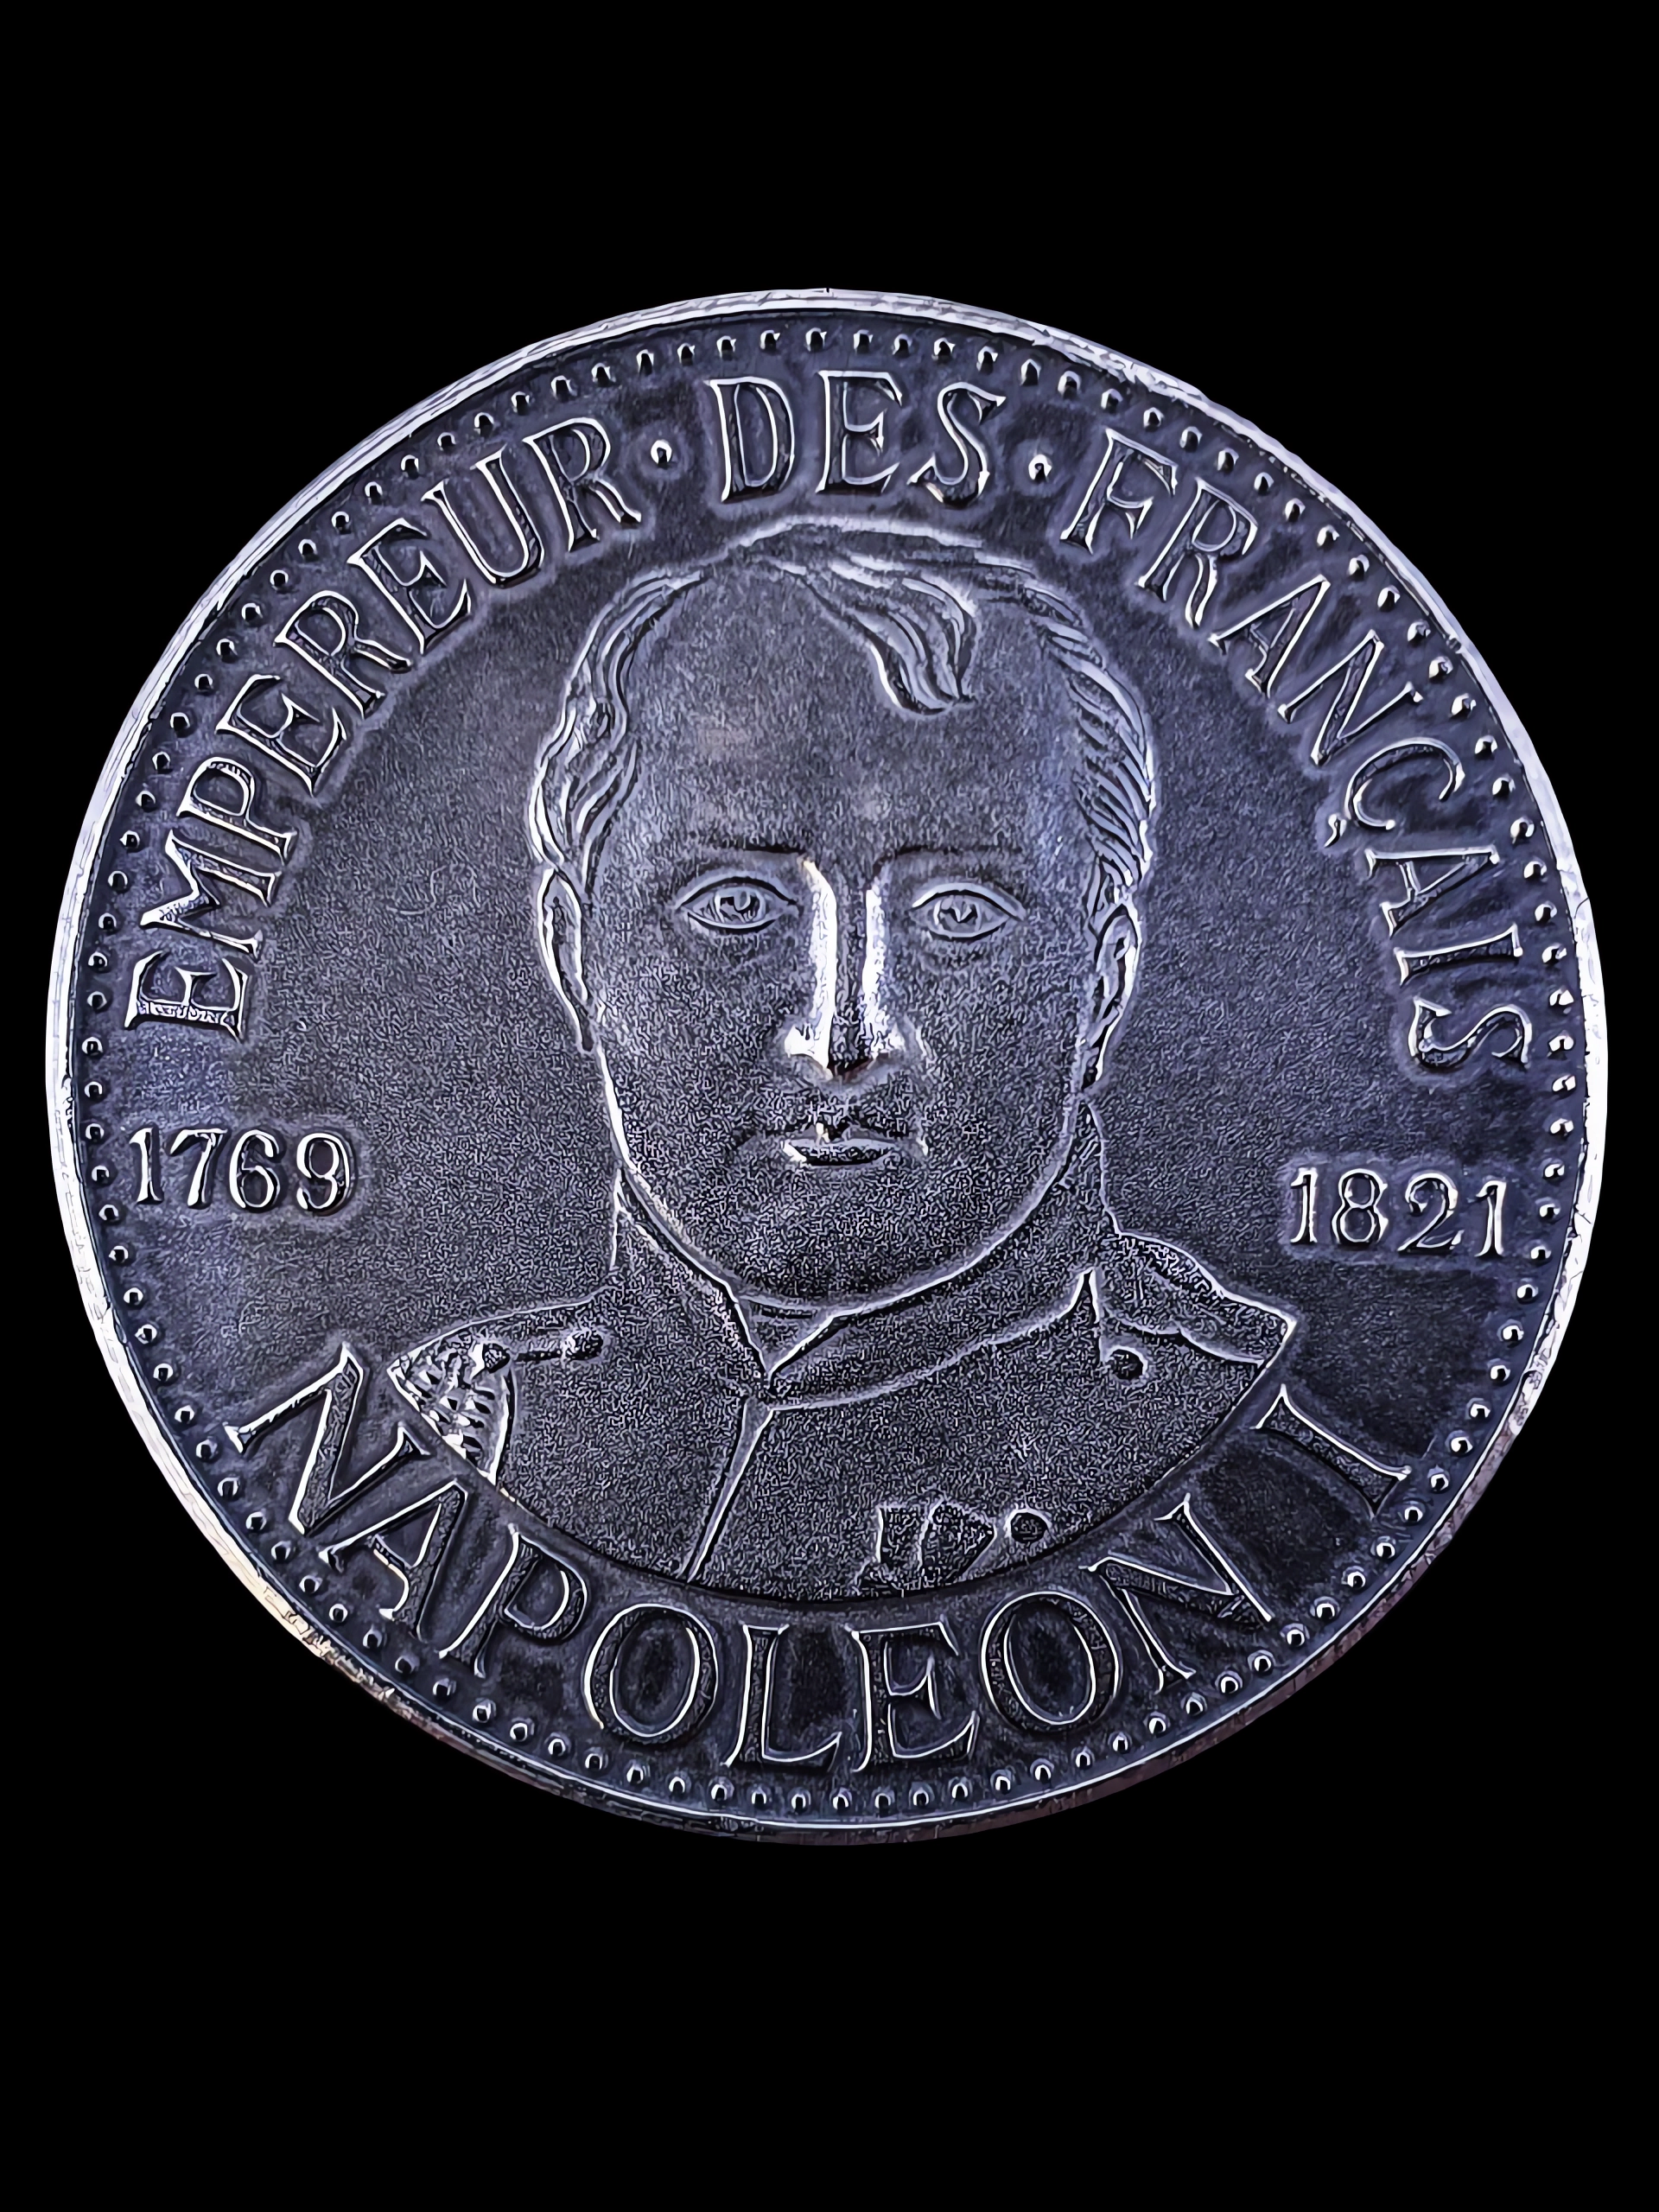 Napoleon I Empereur des Français Silver Medallion